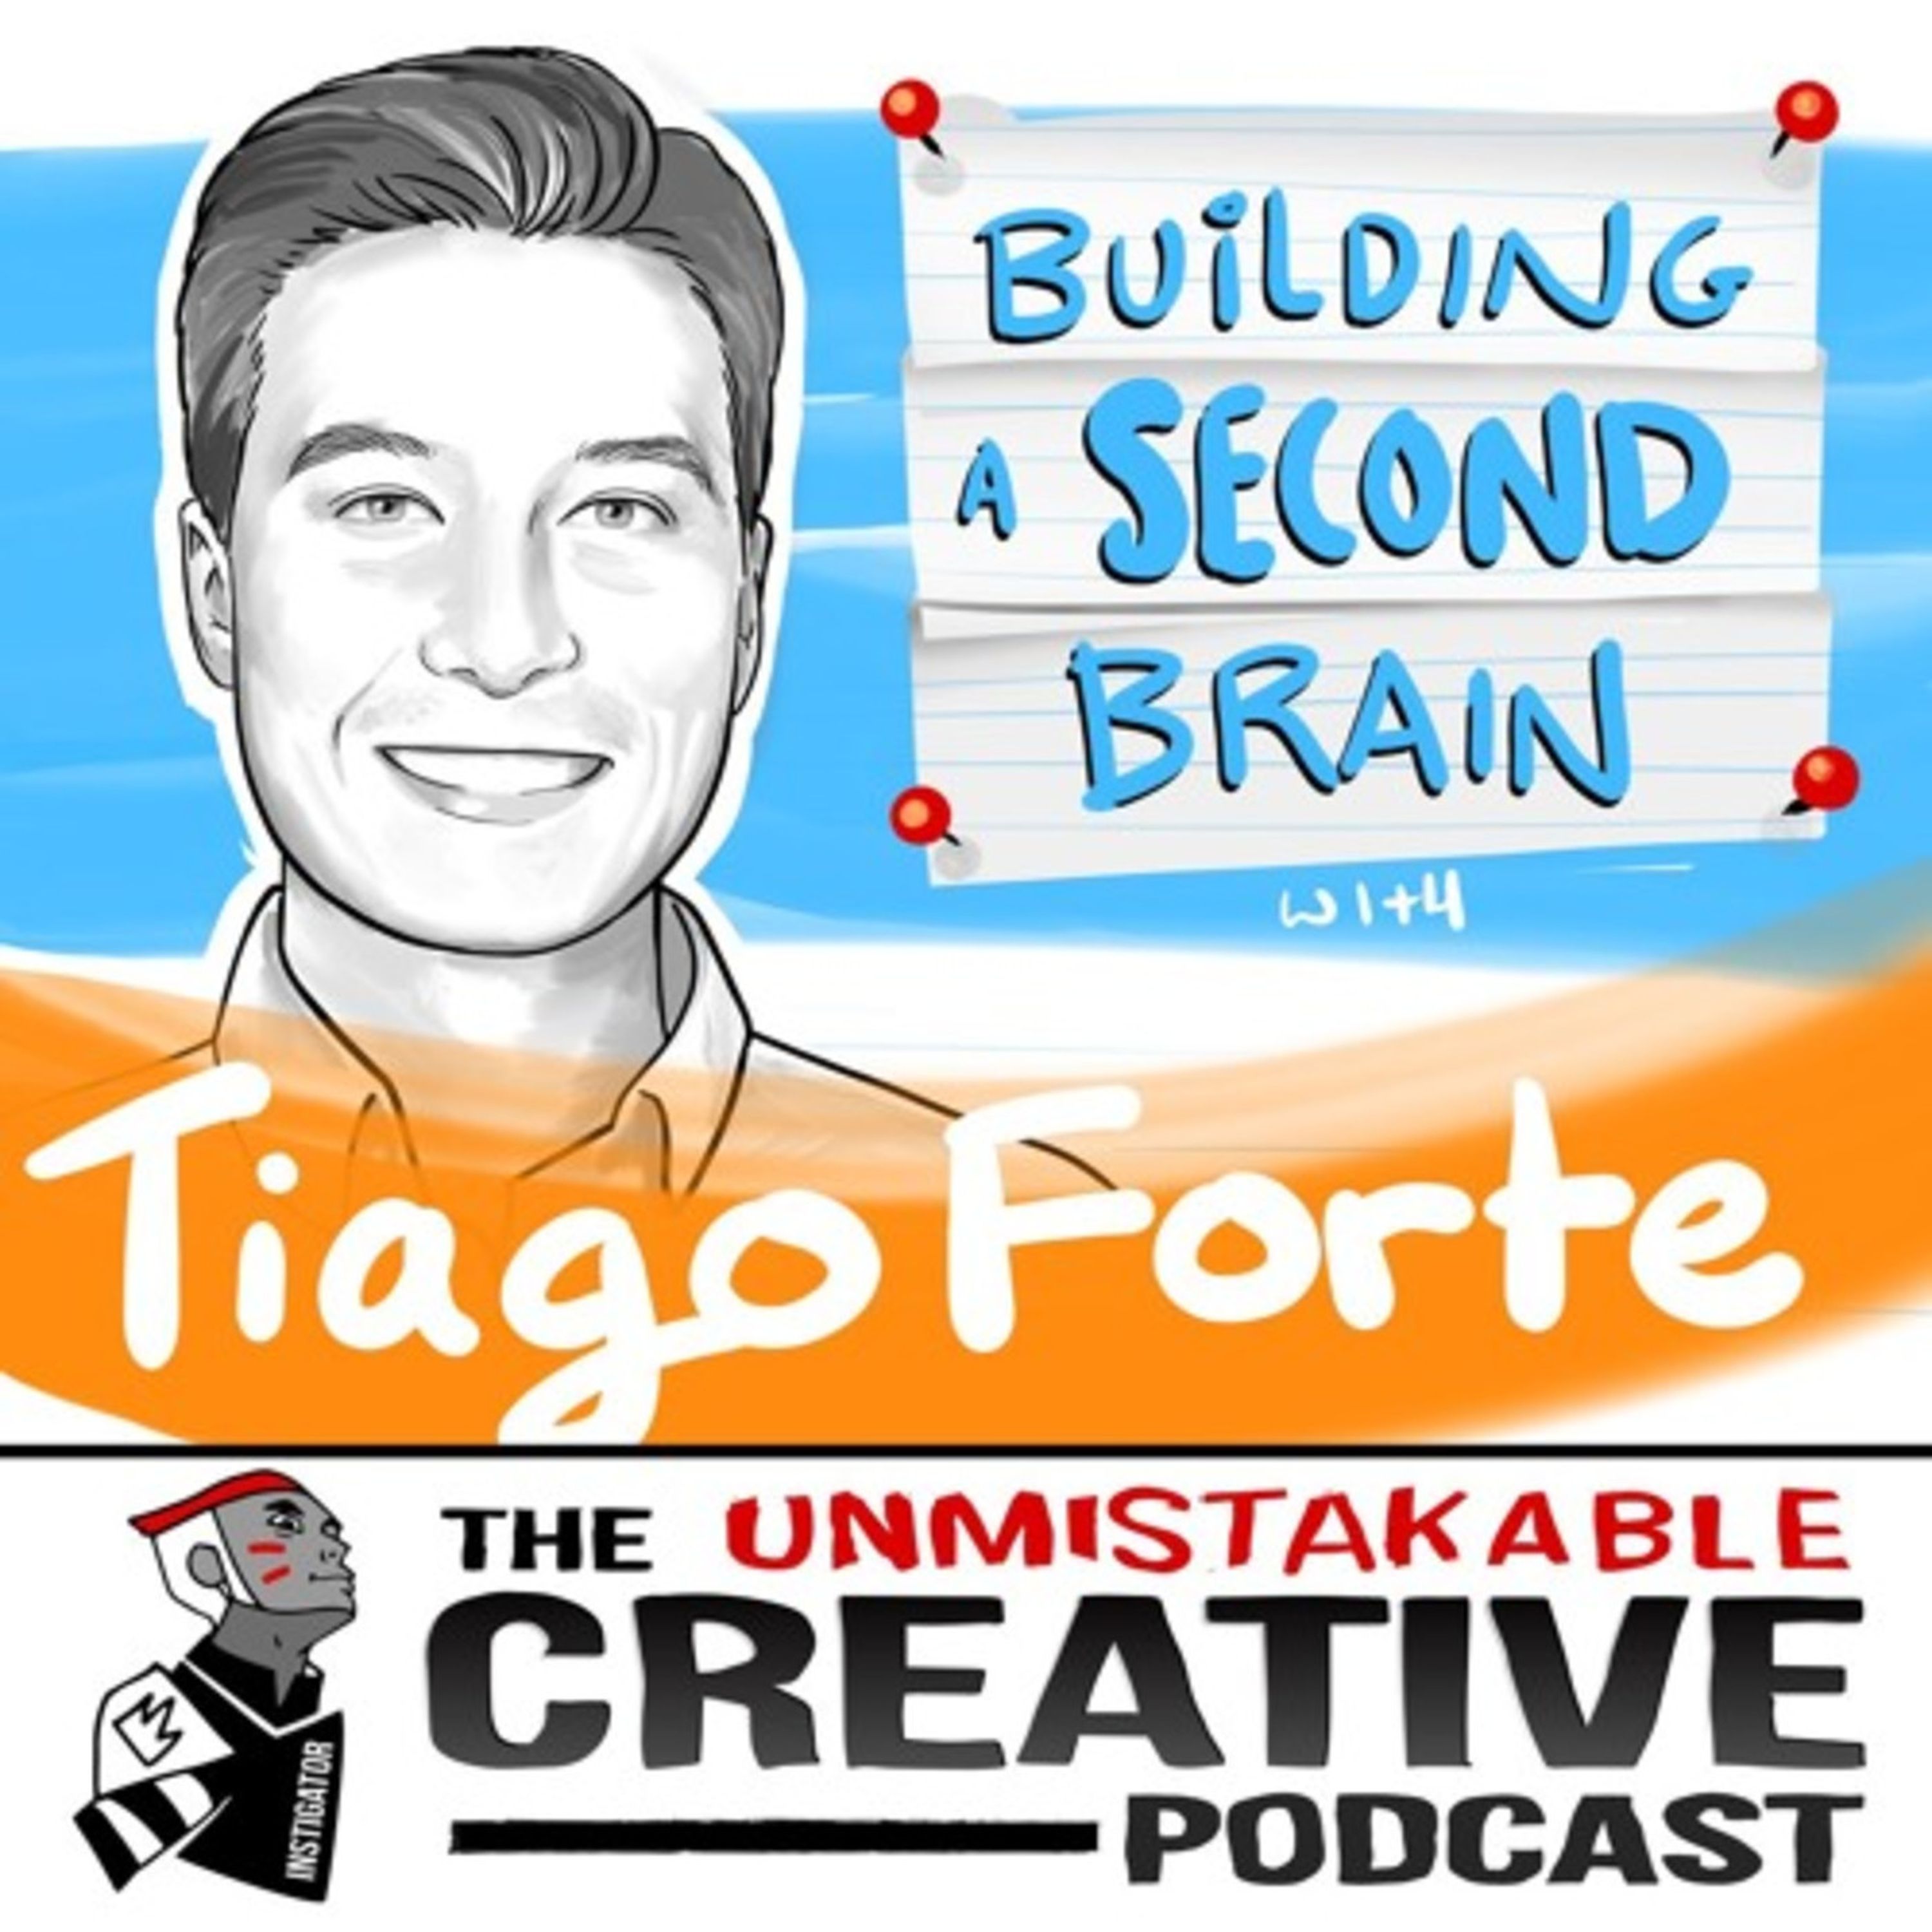 Tiago Forte: Building a Second Brain Image